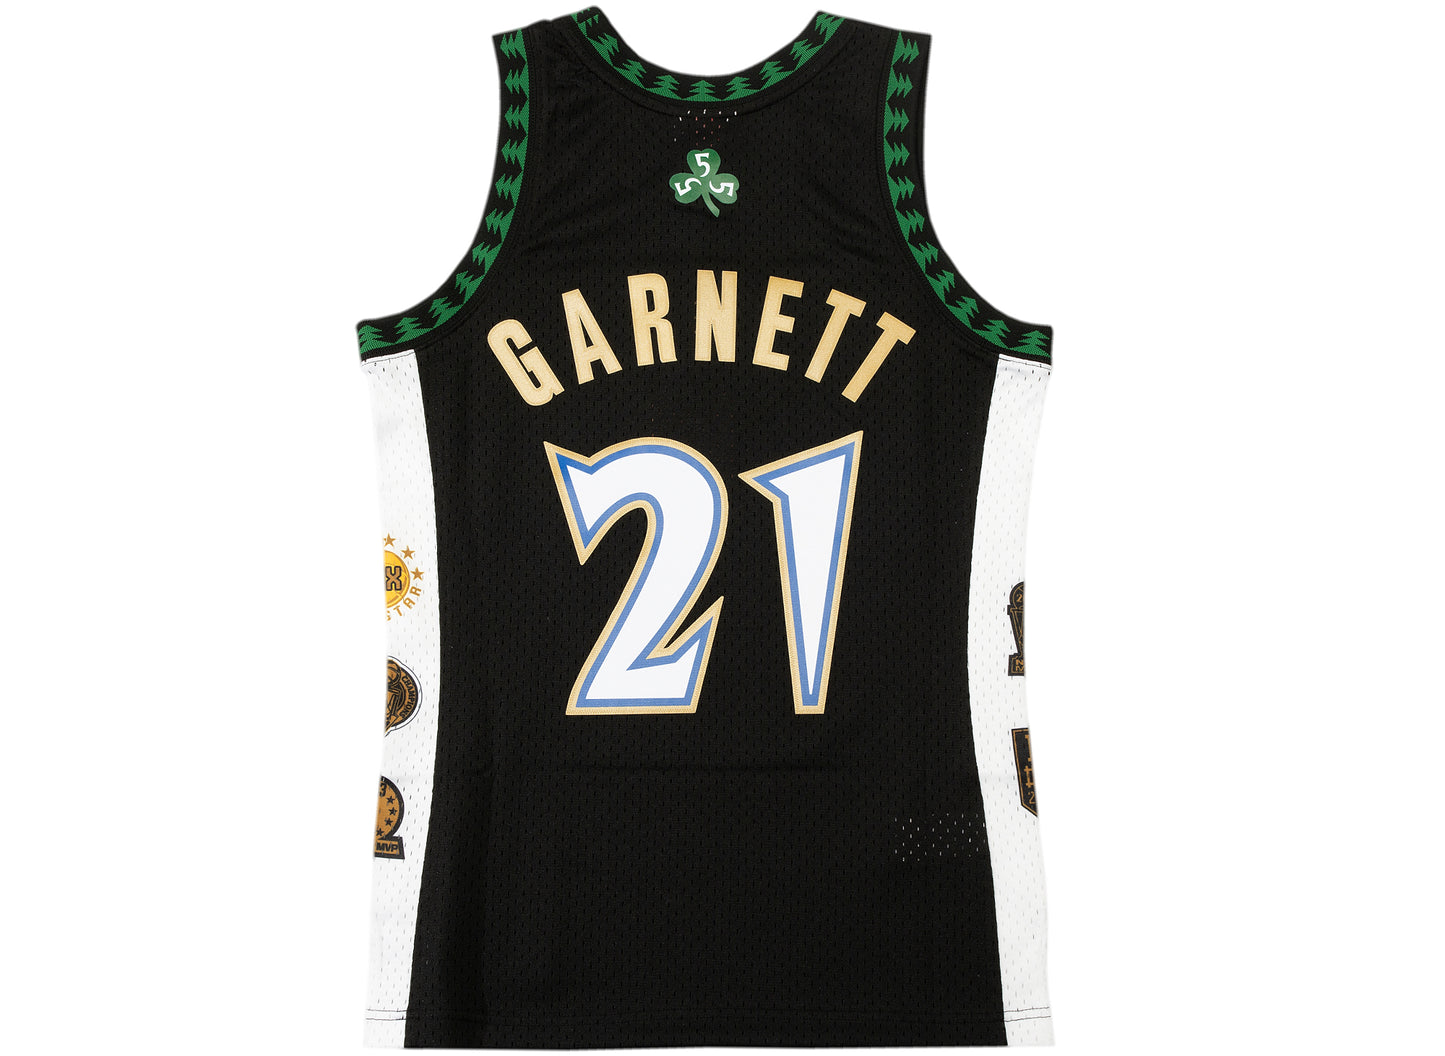 NBA_ Mitchell and Ness Vintage Basketball Jerseys Kevin Garnett 21